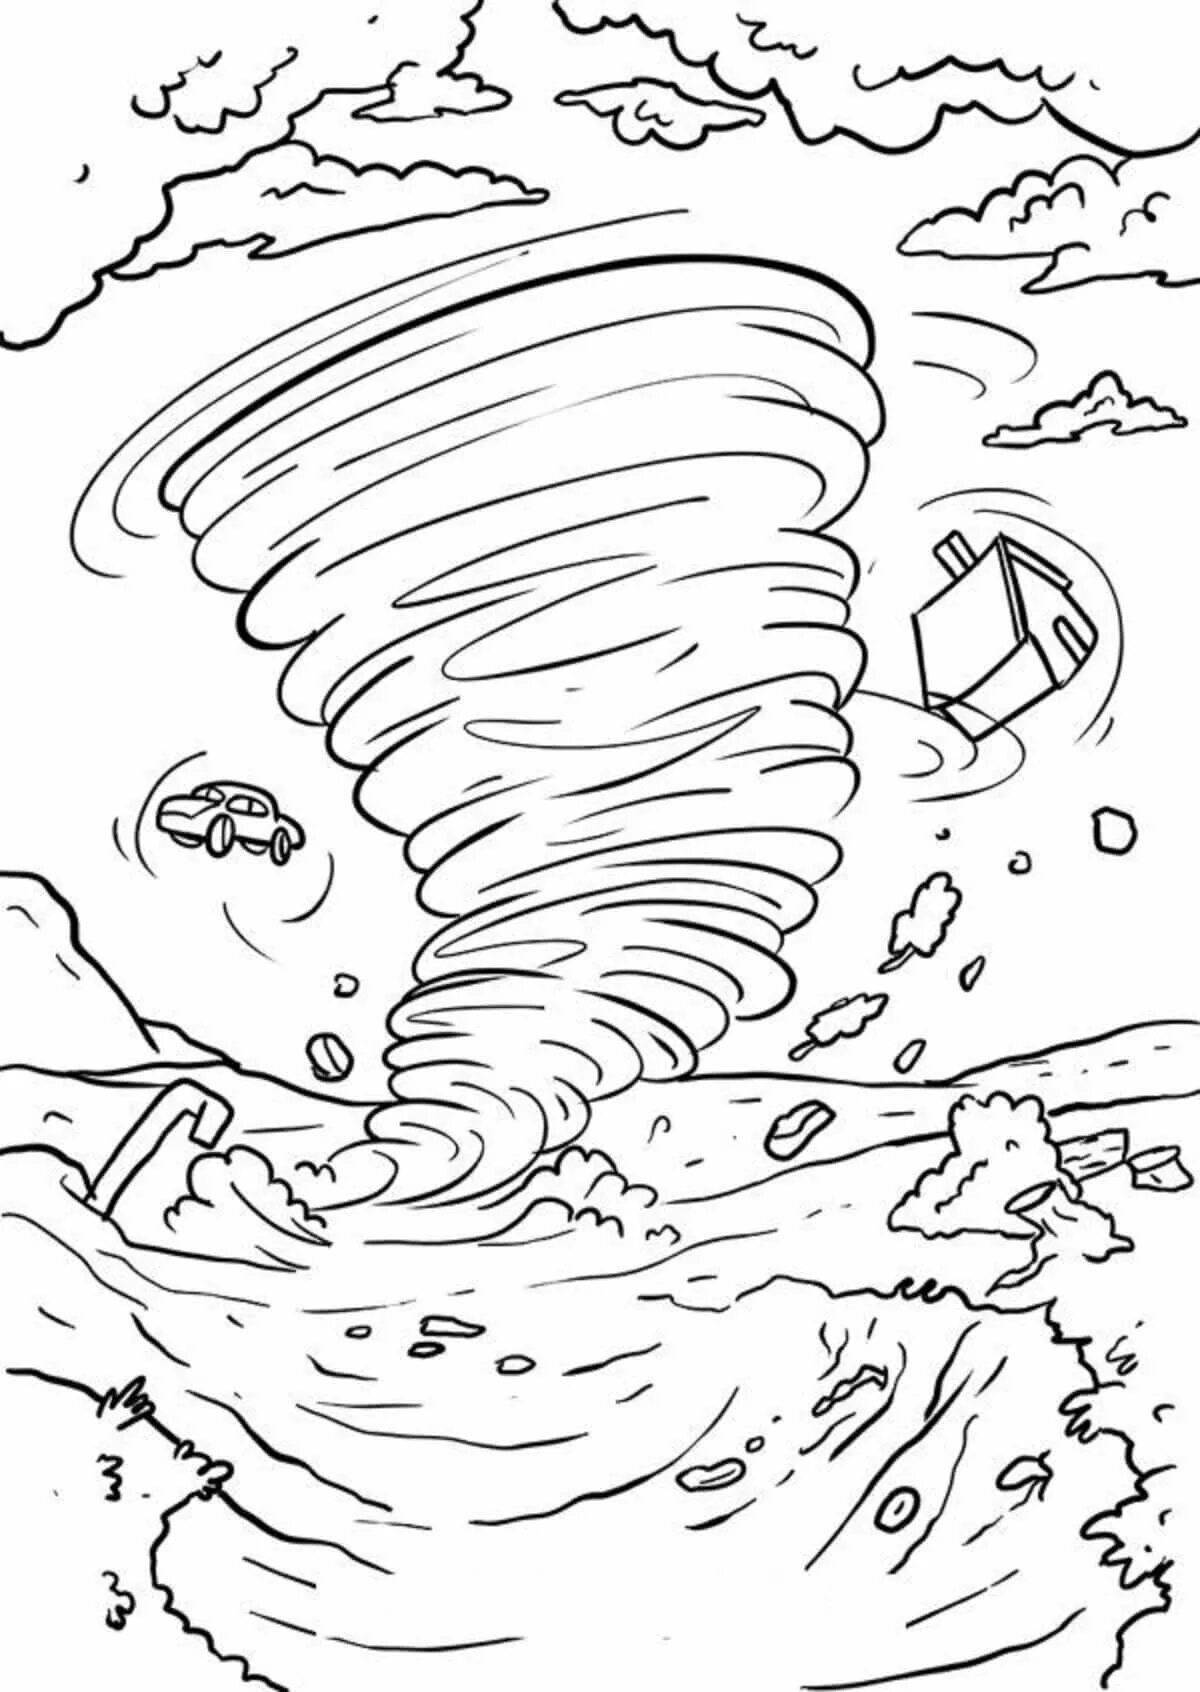 Great tsunami coloring book